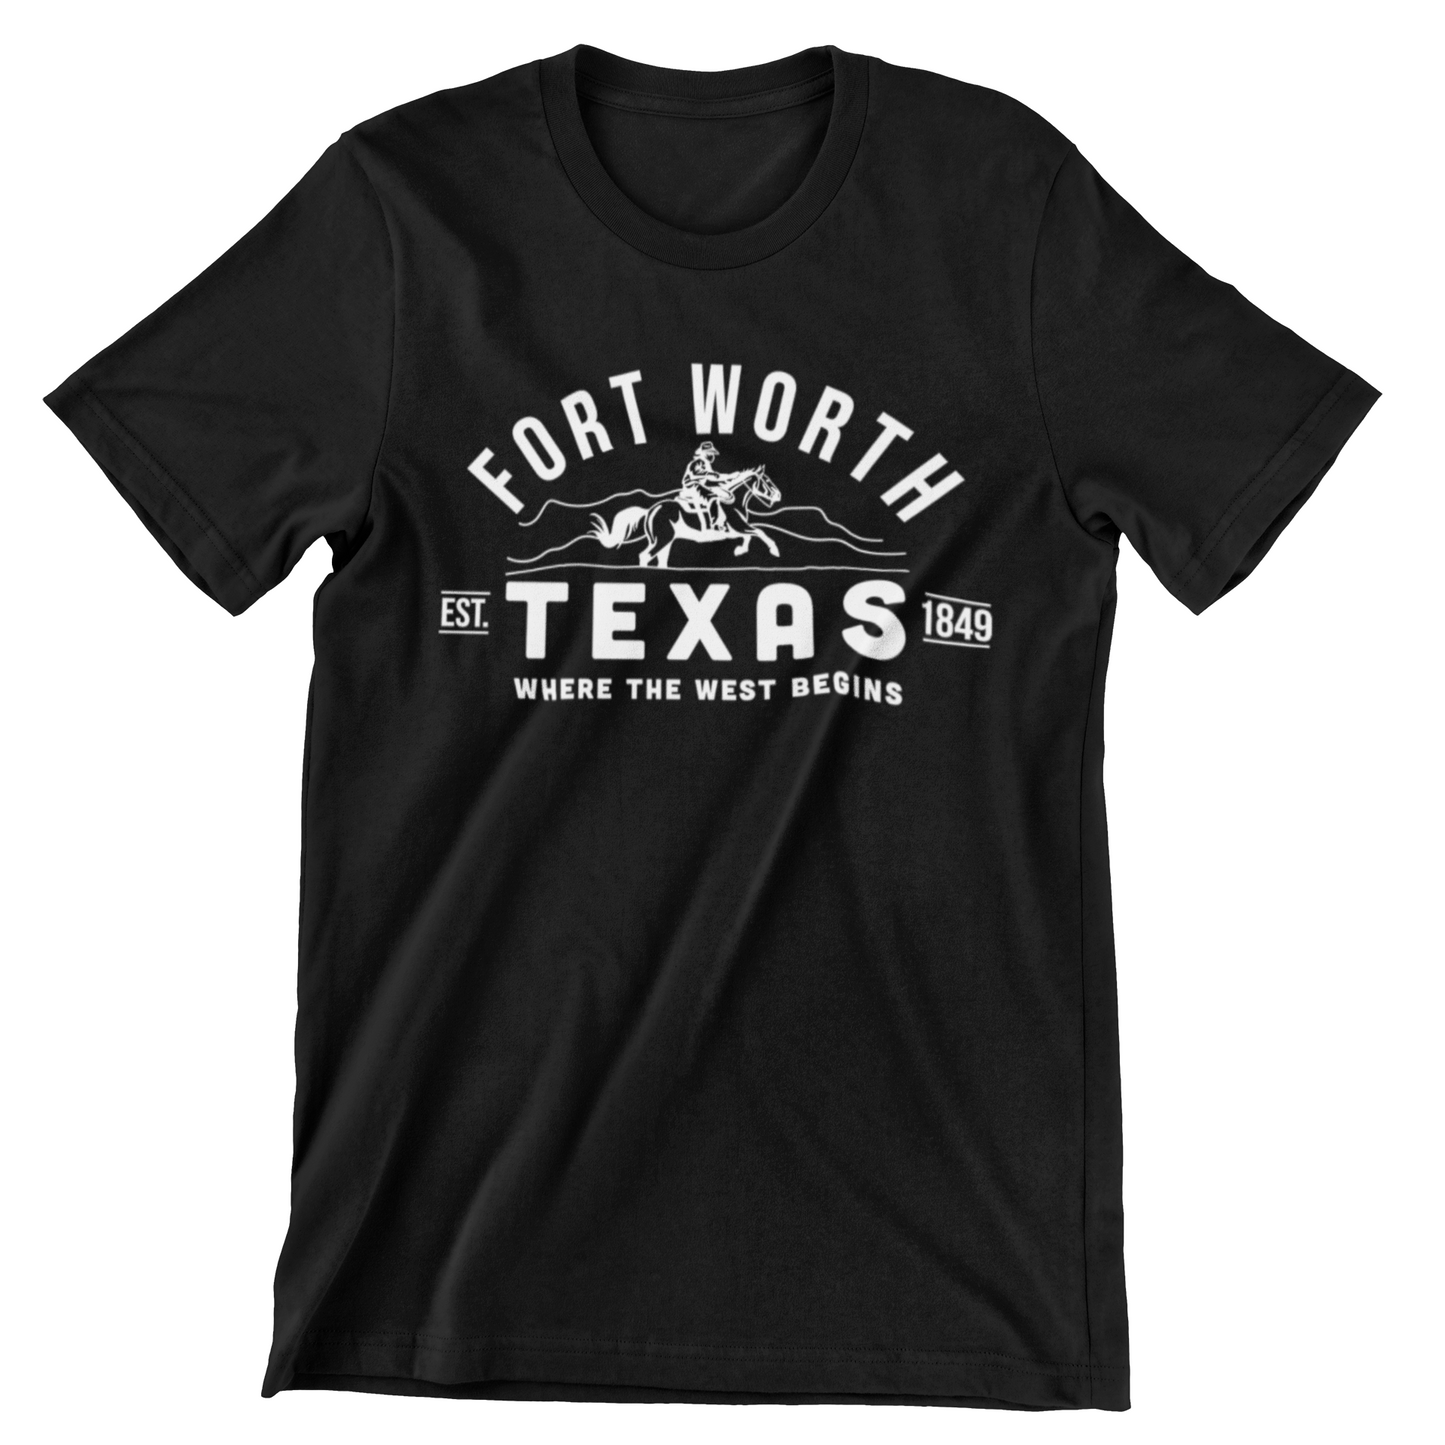 Fort Worth Texas T-shirt